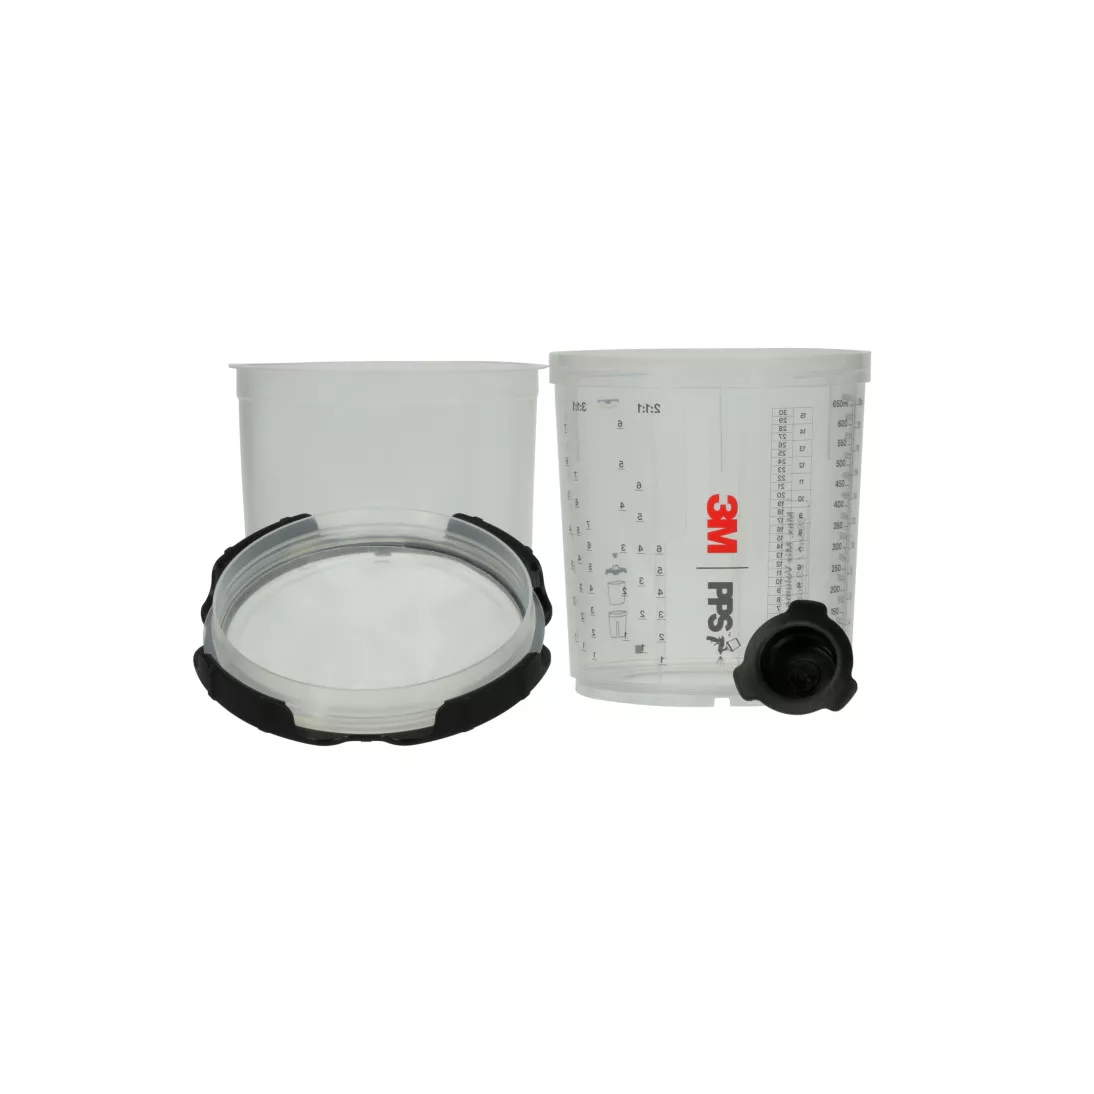 3M™ PPS™ Series 2.0 Spray Cup System Kit, 26000, Standard (22 fl oz, 650
mL), 200u Micron Filter, 1 kit per case